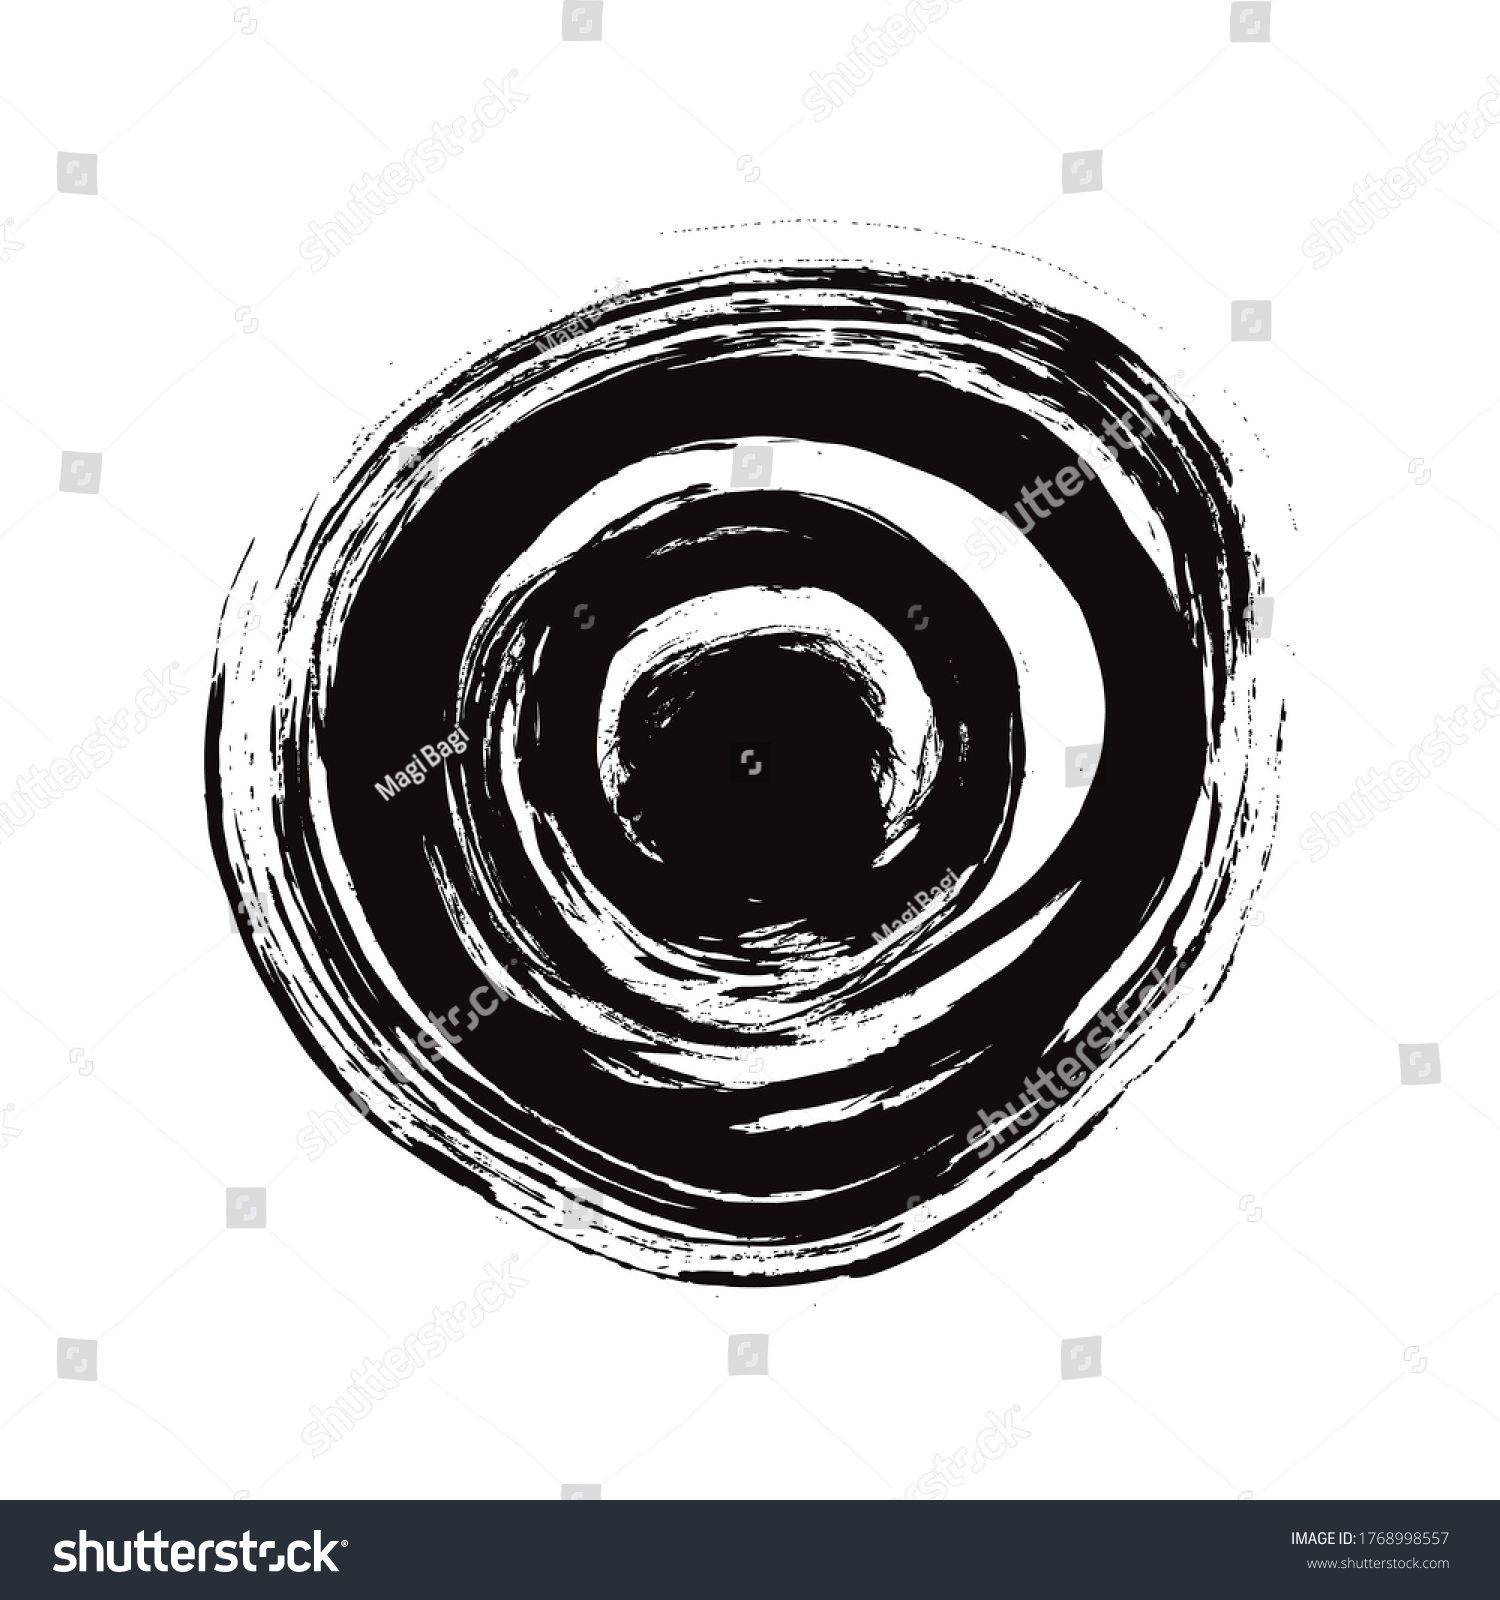 Black Circles Grunge Background Vector Illustration Stock Vector ...